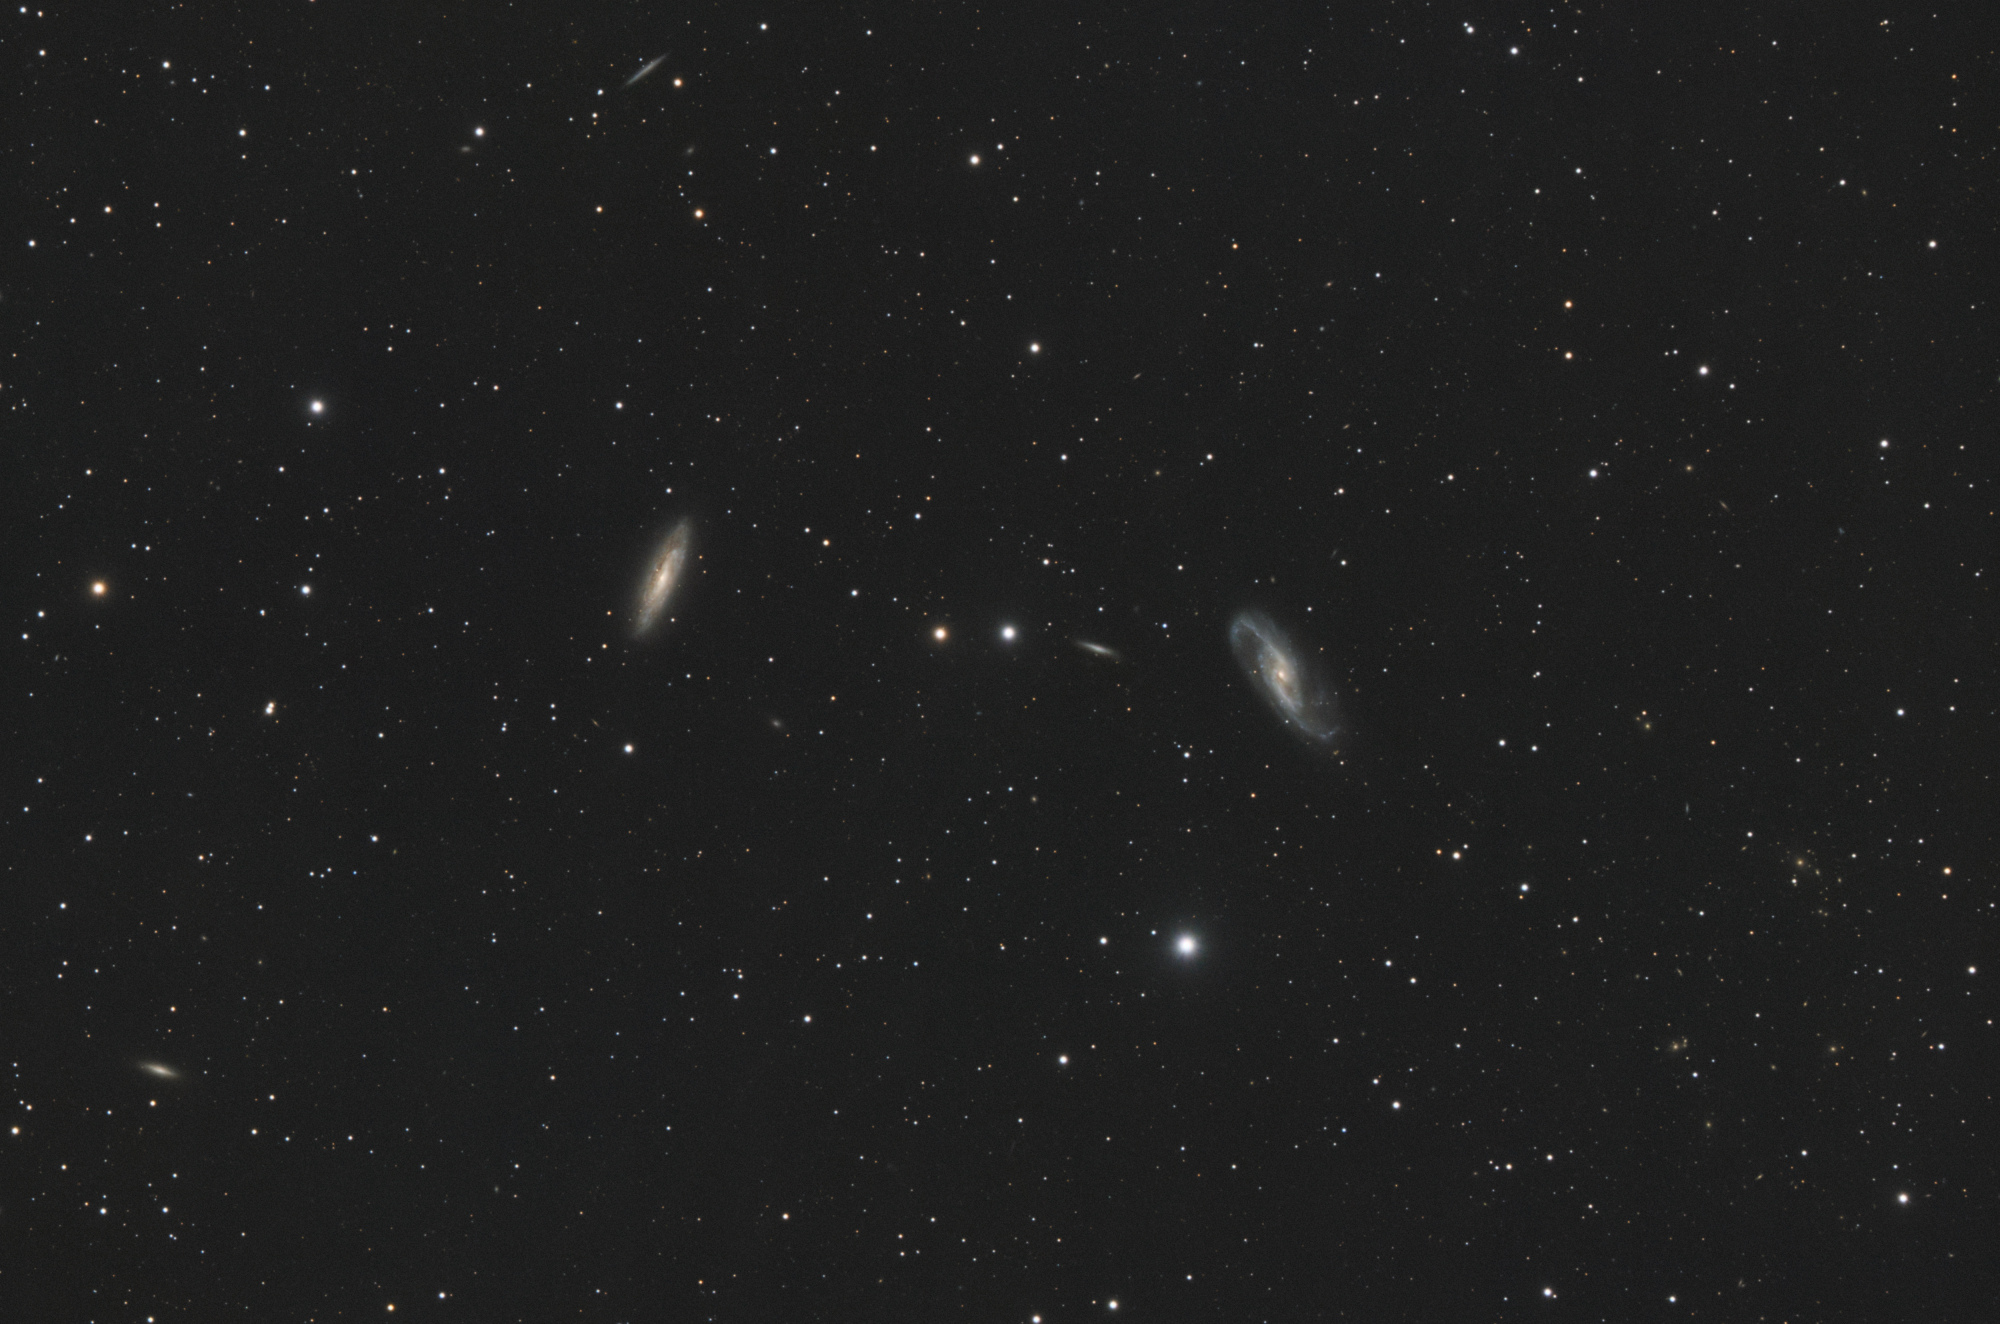 NGC_4536_&_NGC_4527_SIRIL-L-iris-cs5-2-FINAL-2-x.jpg